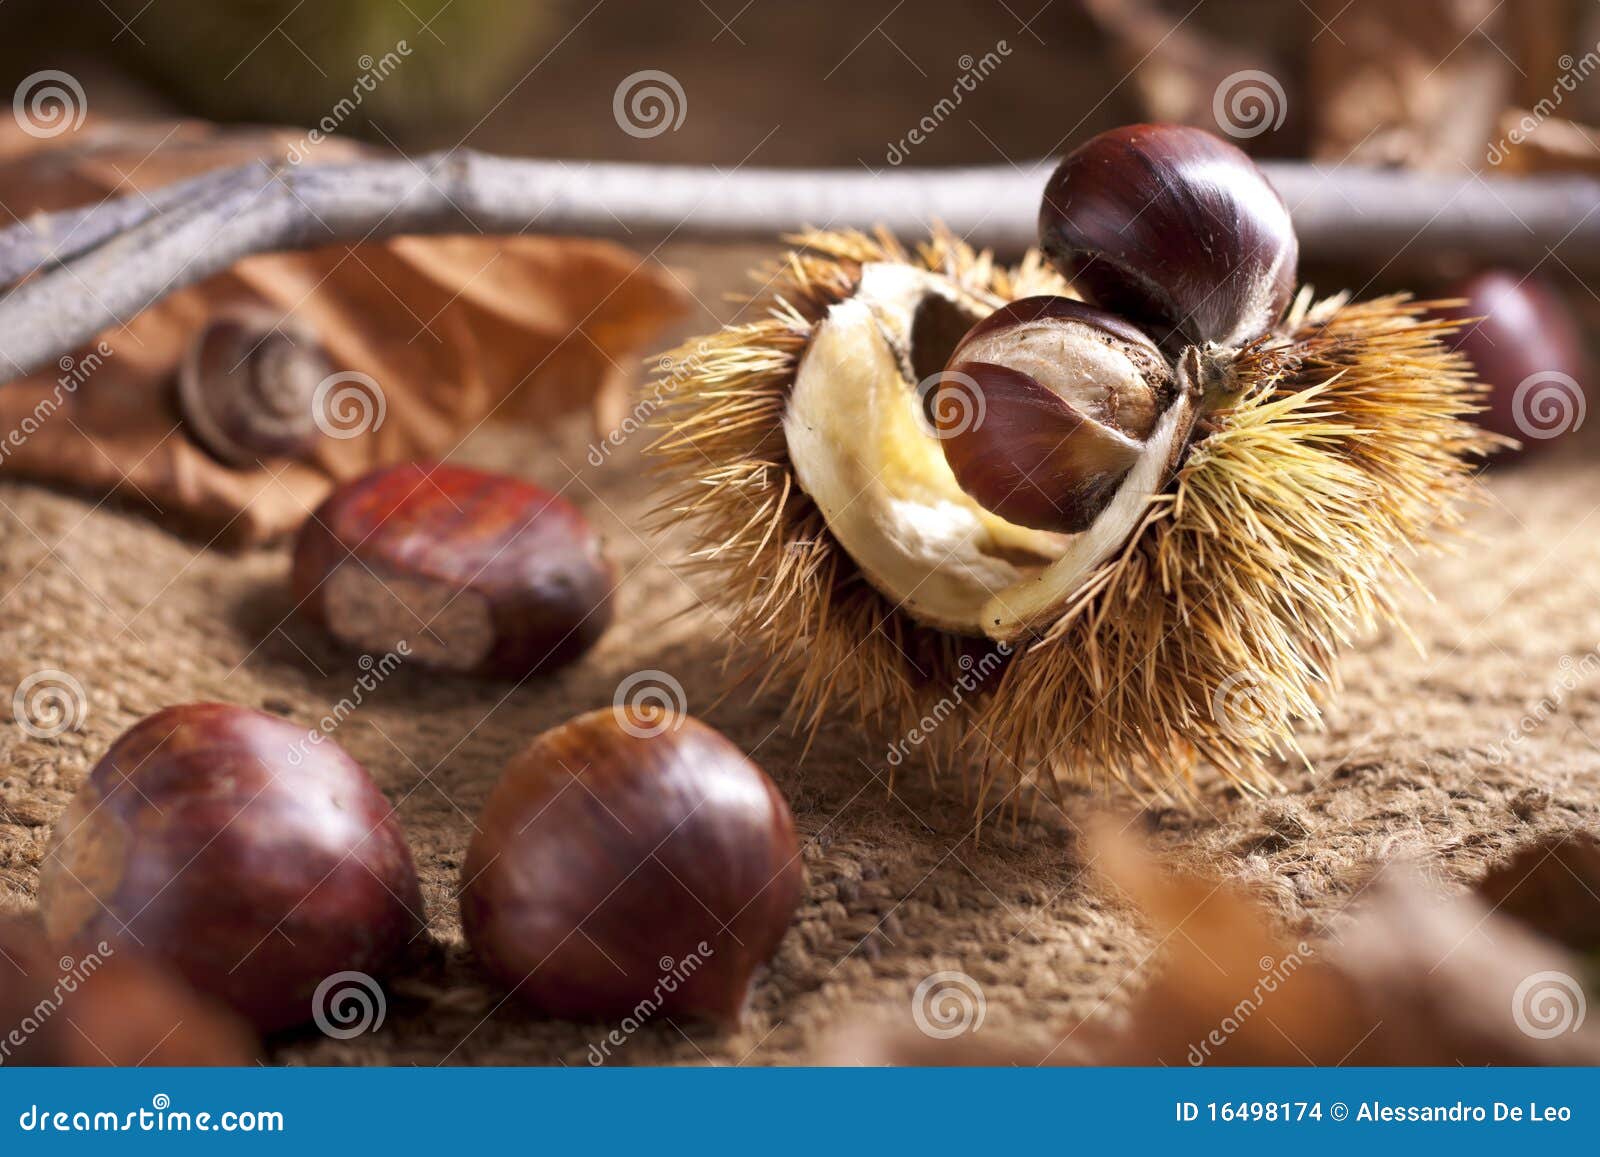 chestnut with bur